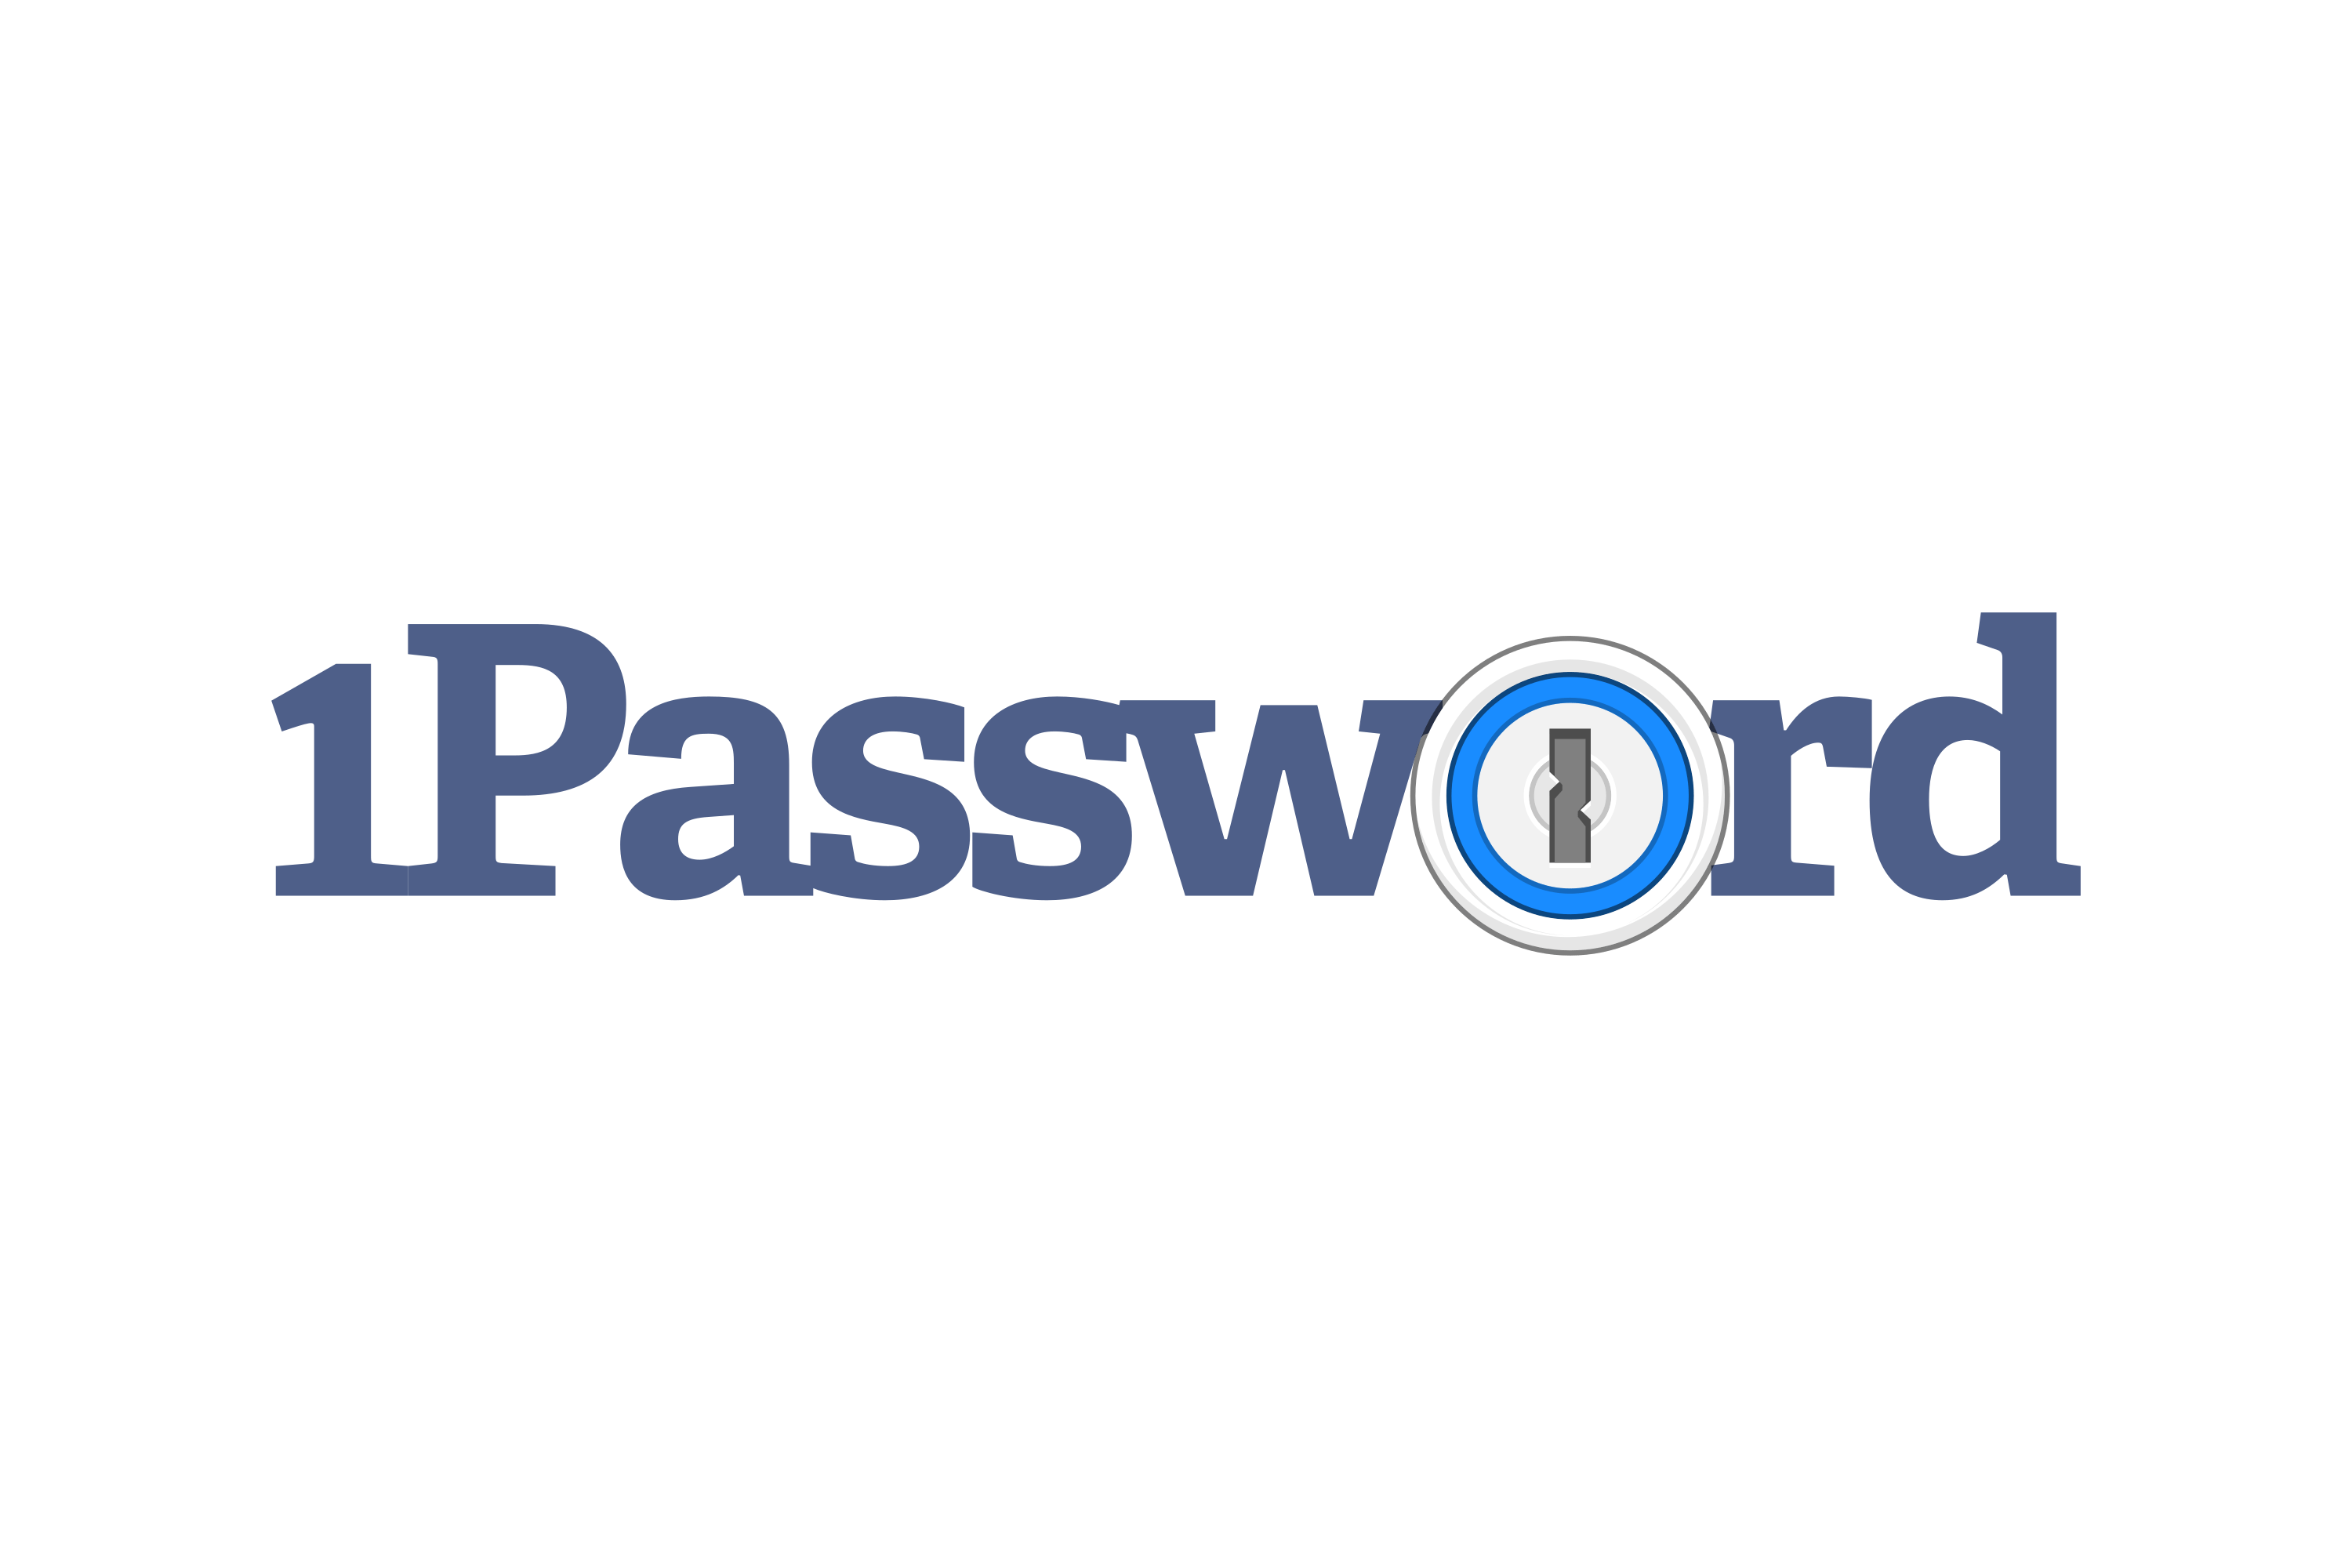 Download 1Password Logo in SVG Vector or PNG File Format - Logo.wine